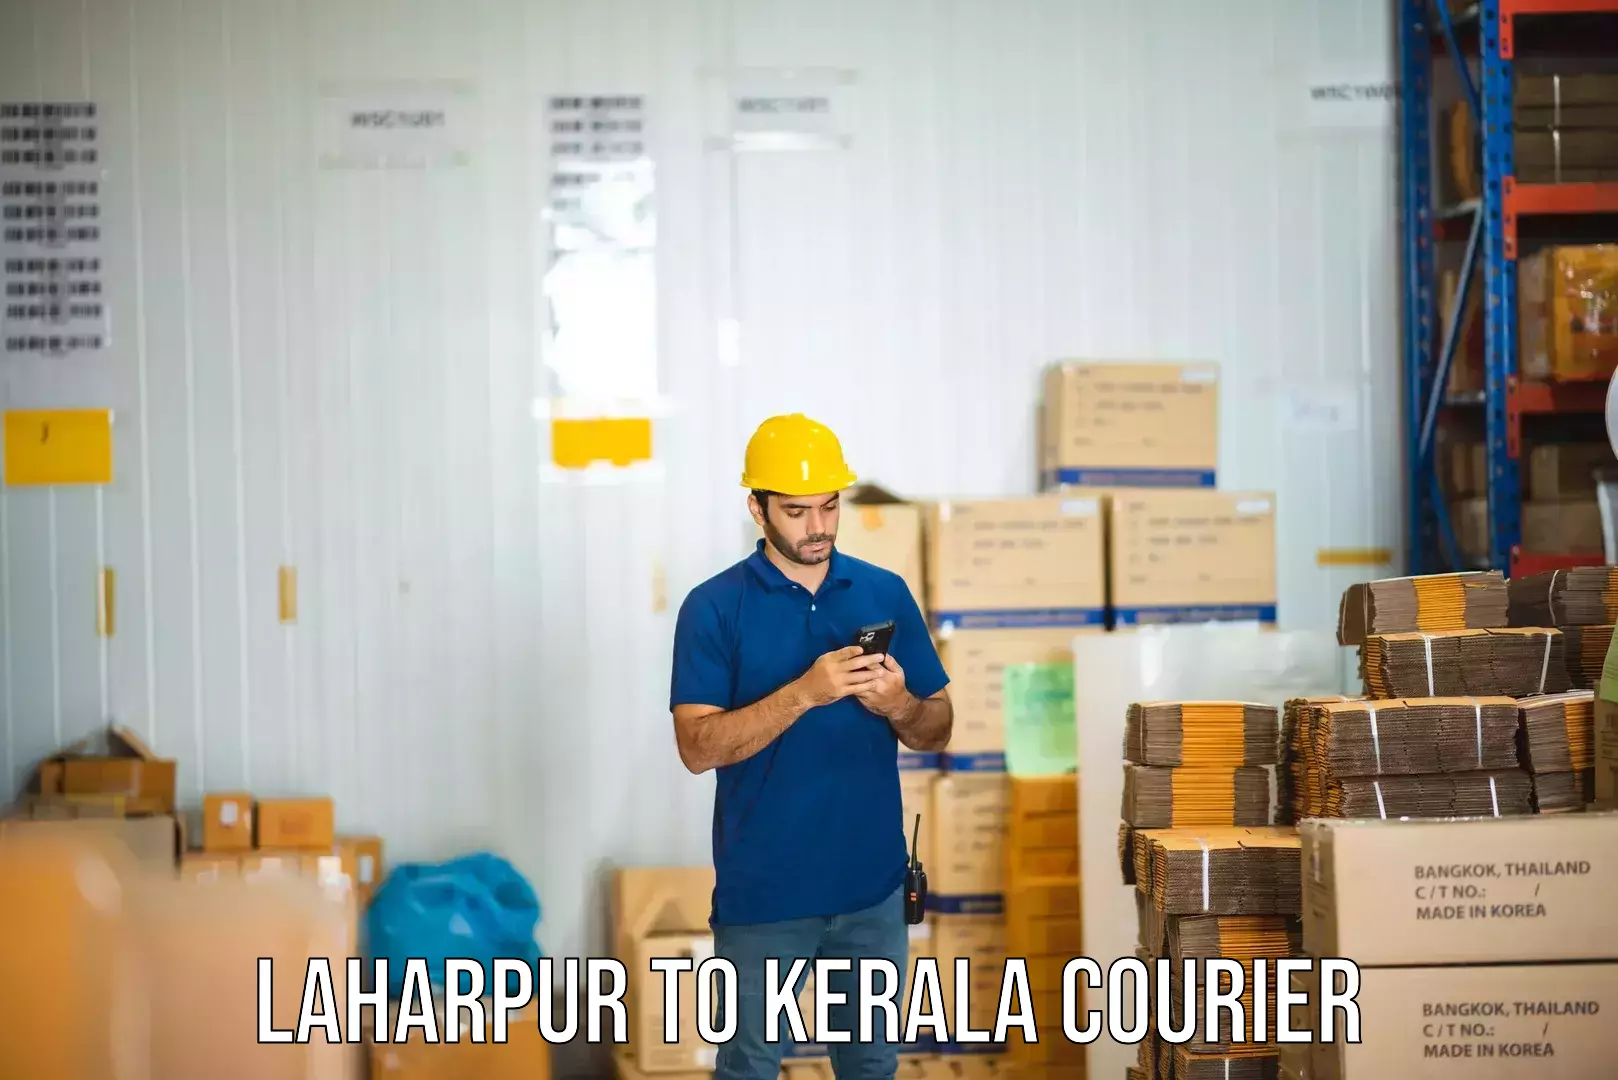 Premium delivery services Laharpur to Kerala